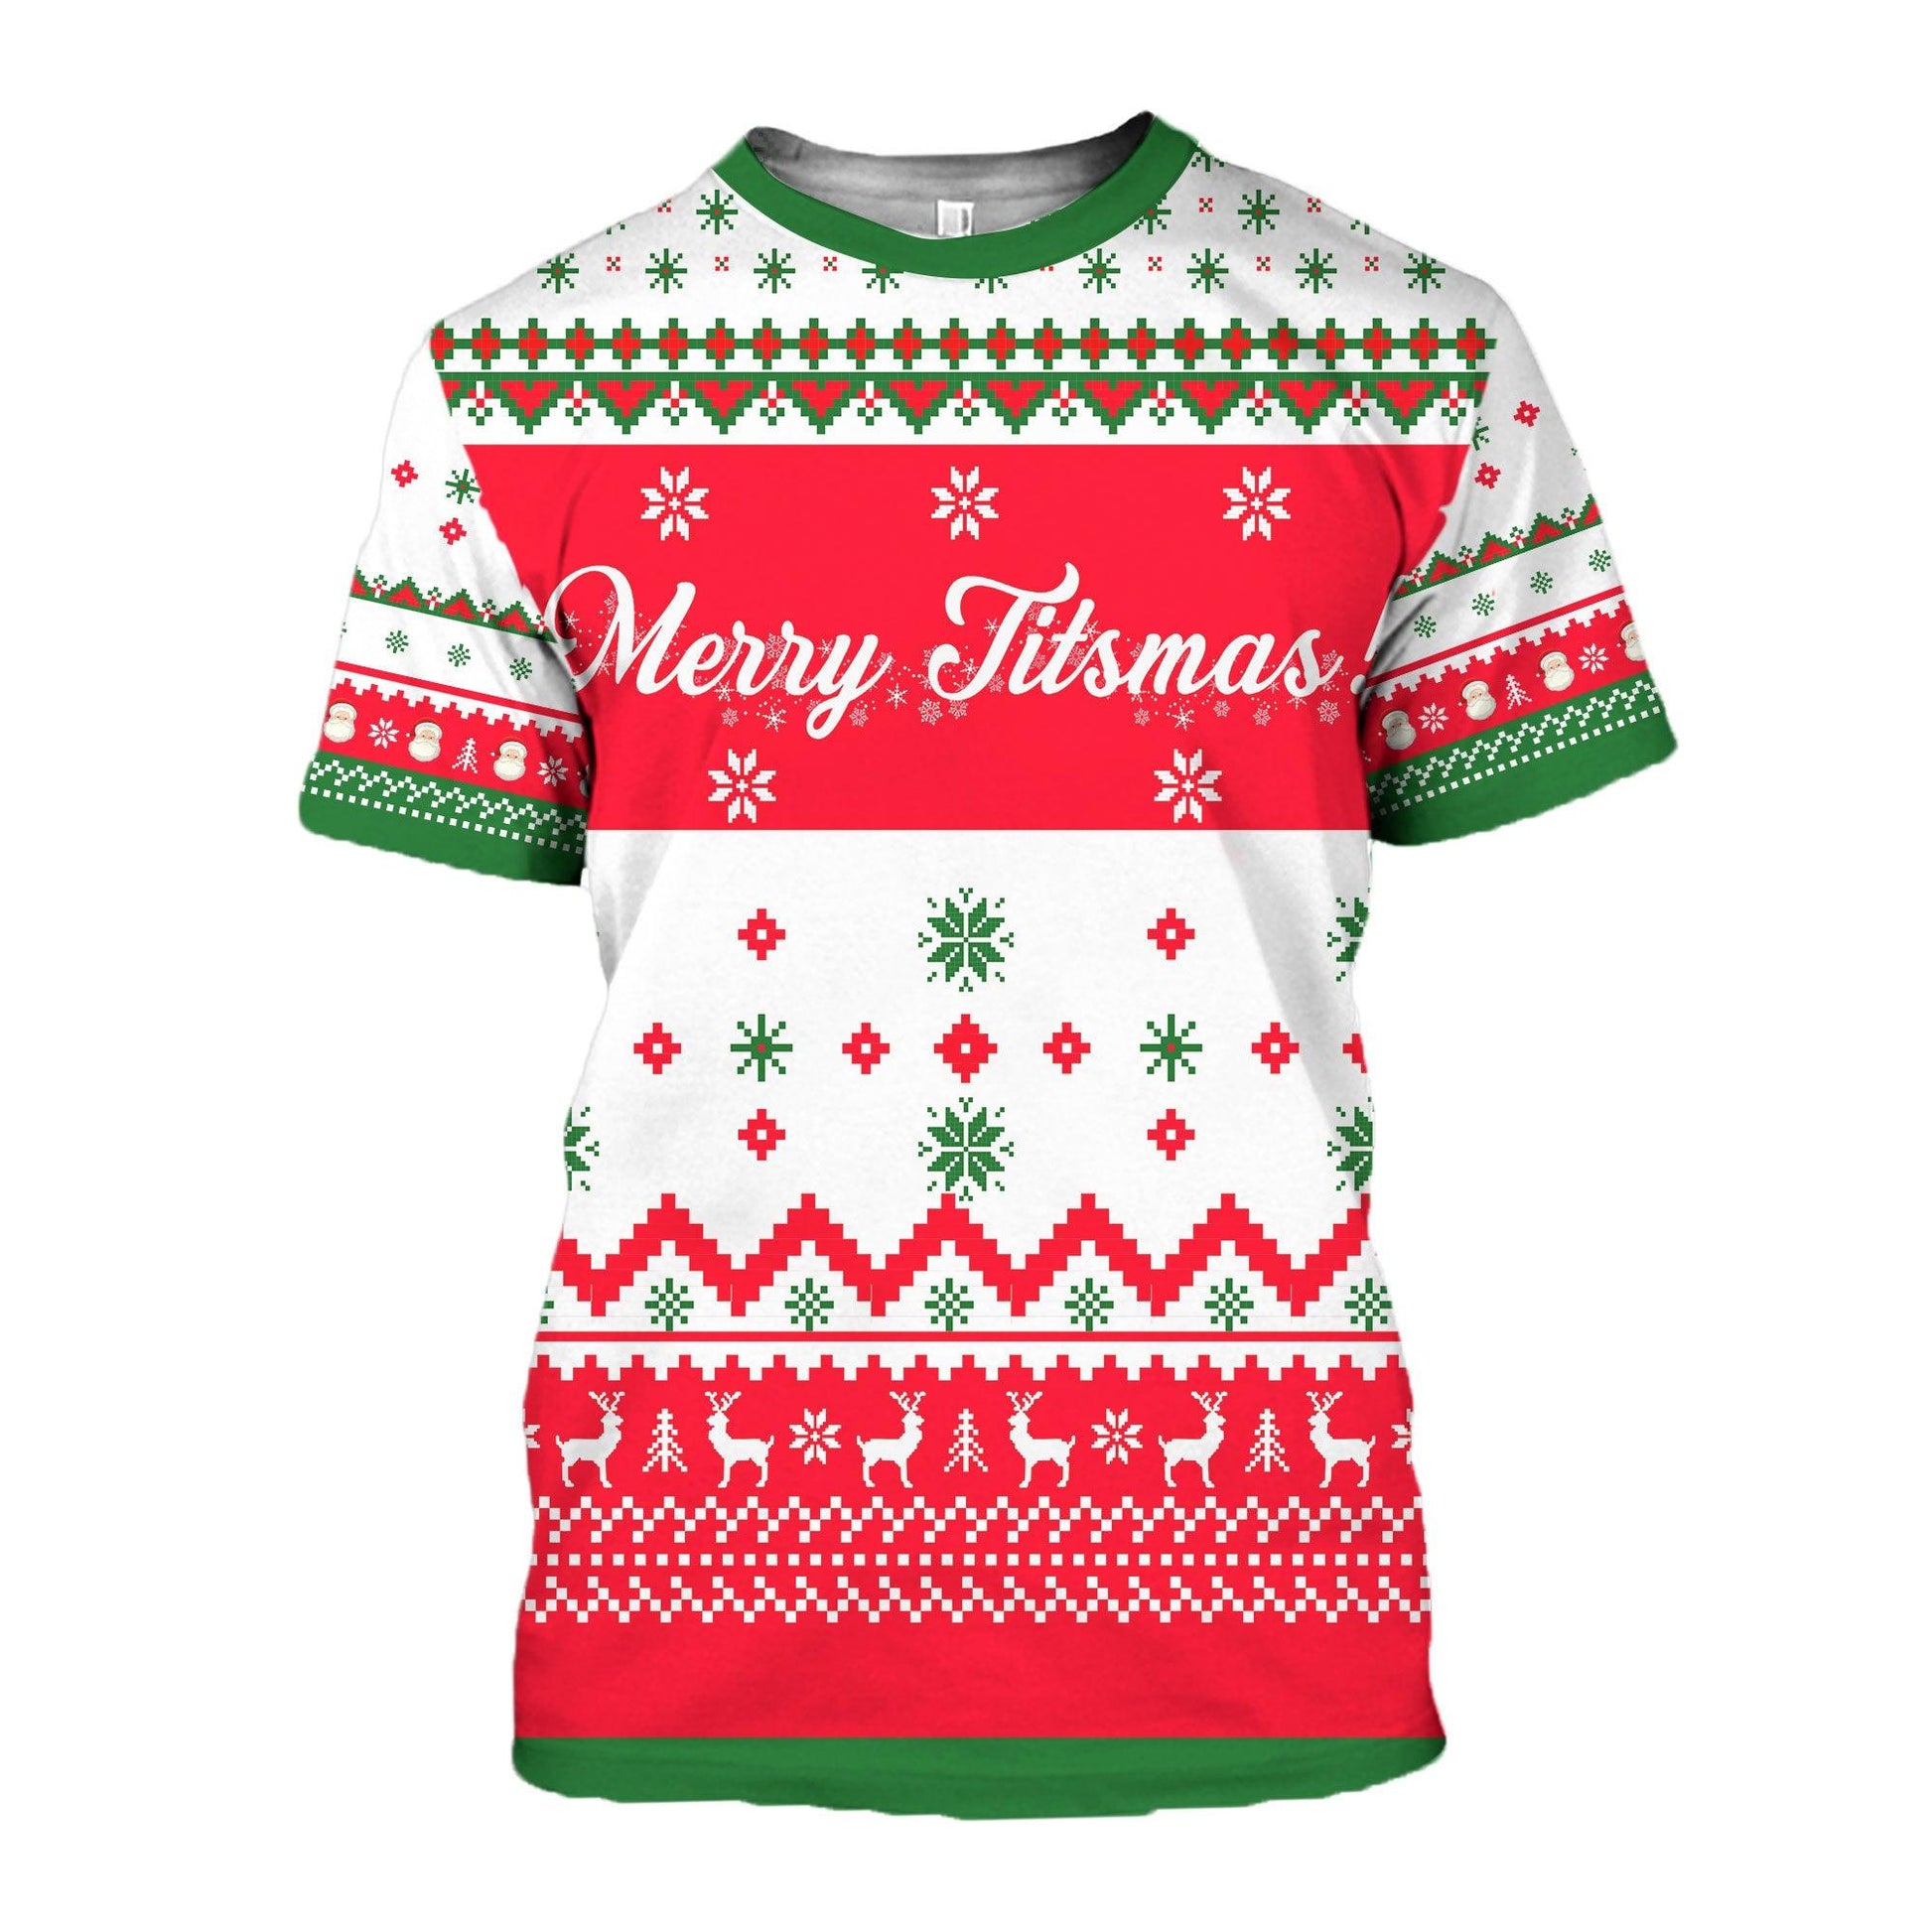 Merry Jitsmas T-shirt